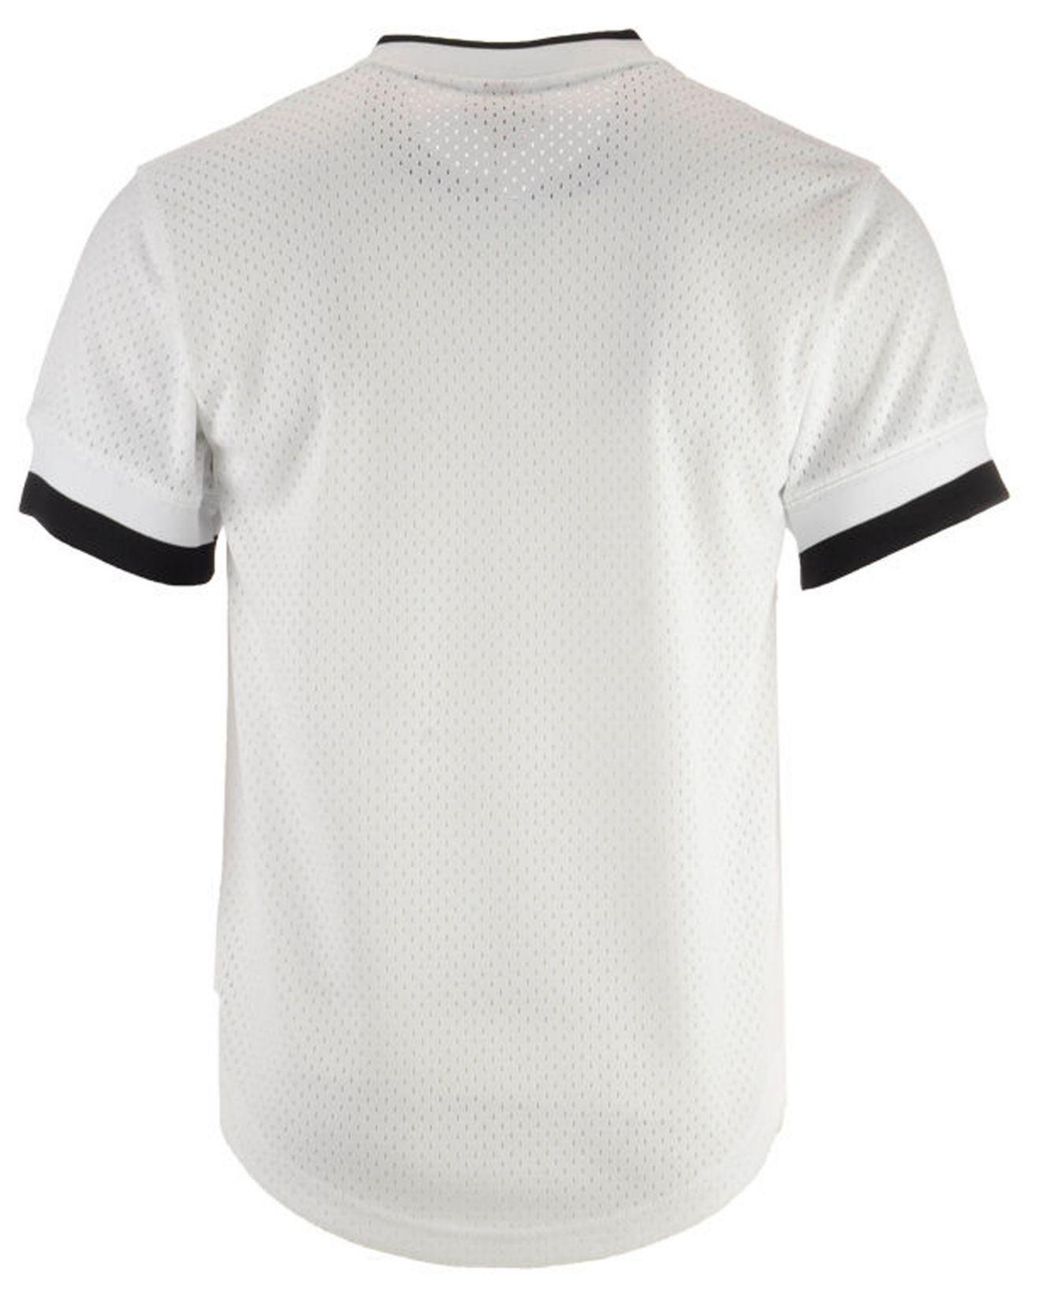 Mitchell & Ness T-shirt - Fashion Mesh V-Neck Los Angeles Lakers White, Men